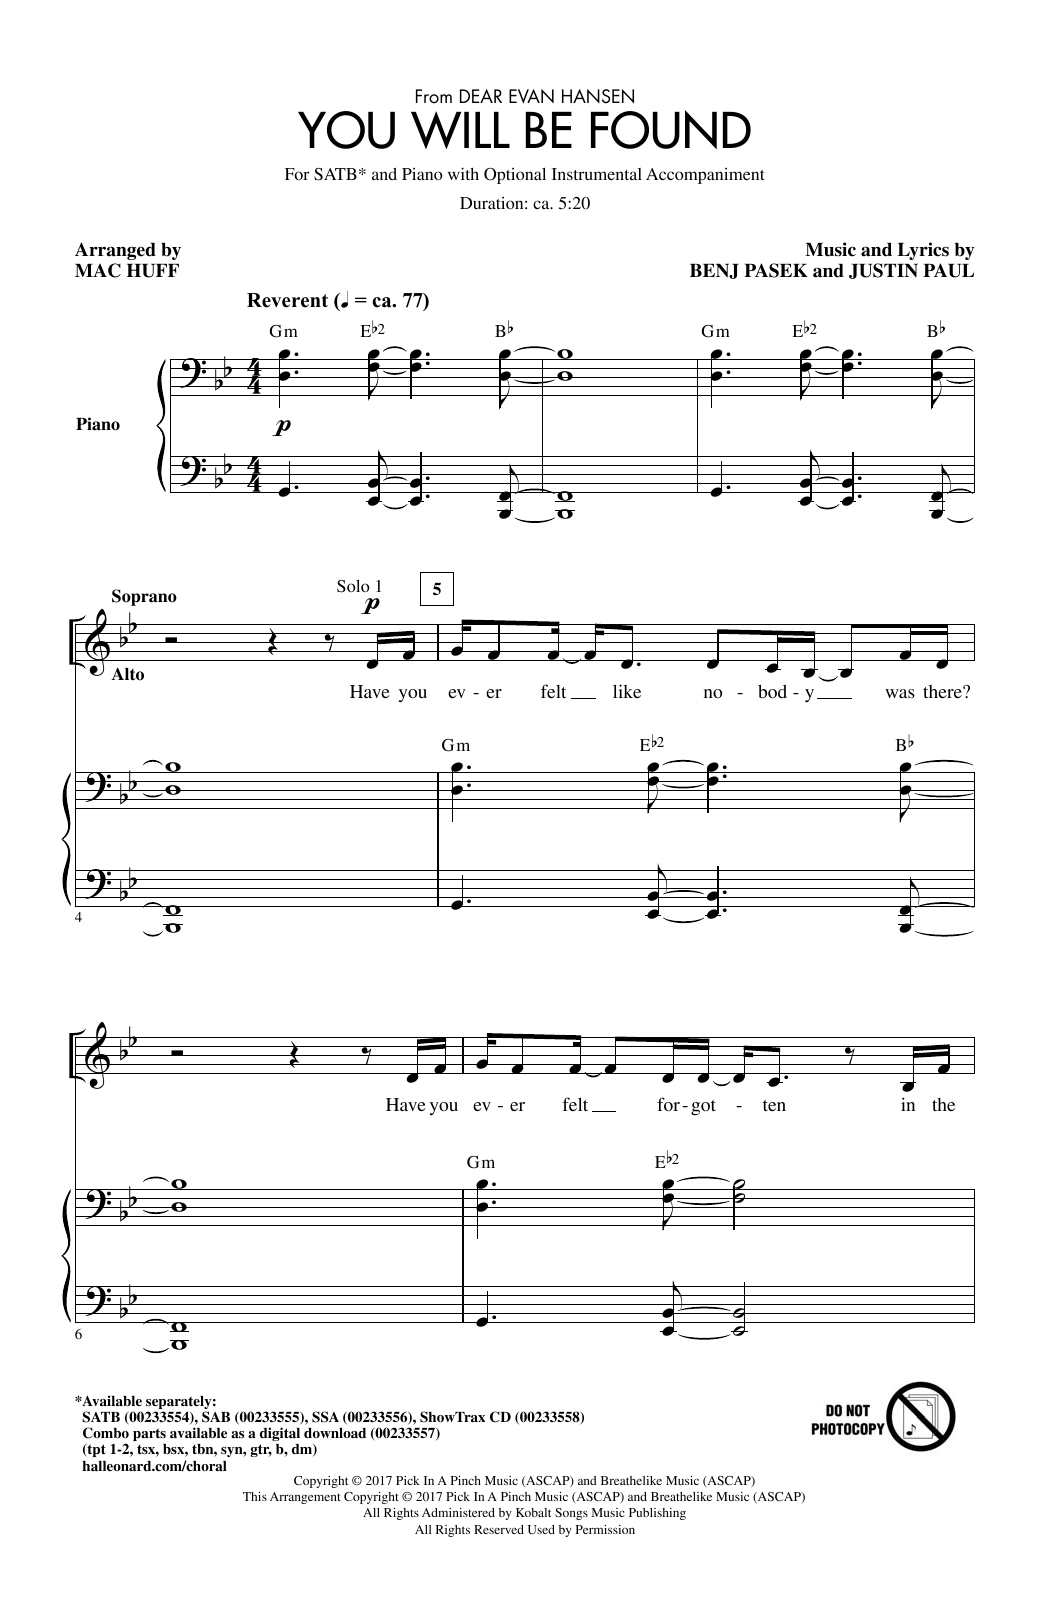 Pasek & Paul You Will Be Found (from Dear Evan Hansen) (arr. Mac Huff) Sheet Music Notes & Chords for SAB Choir - Download or Print PDF